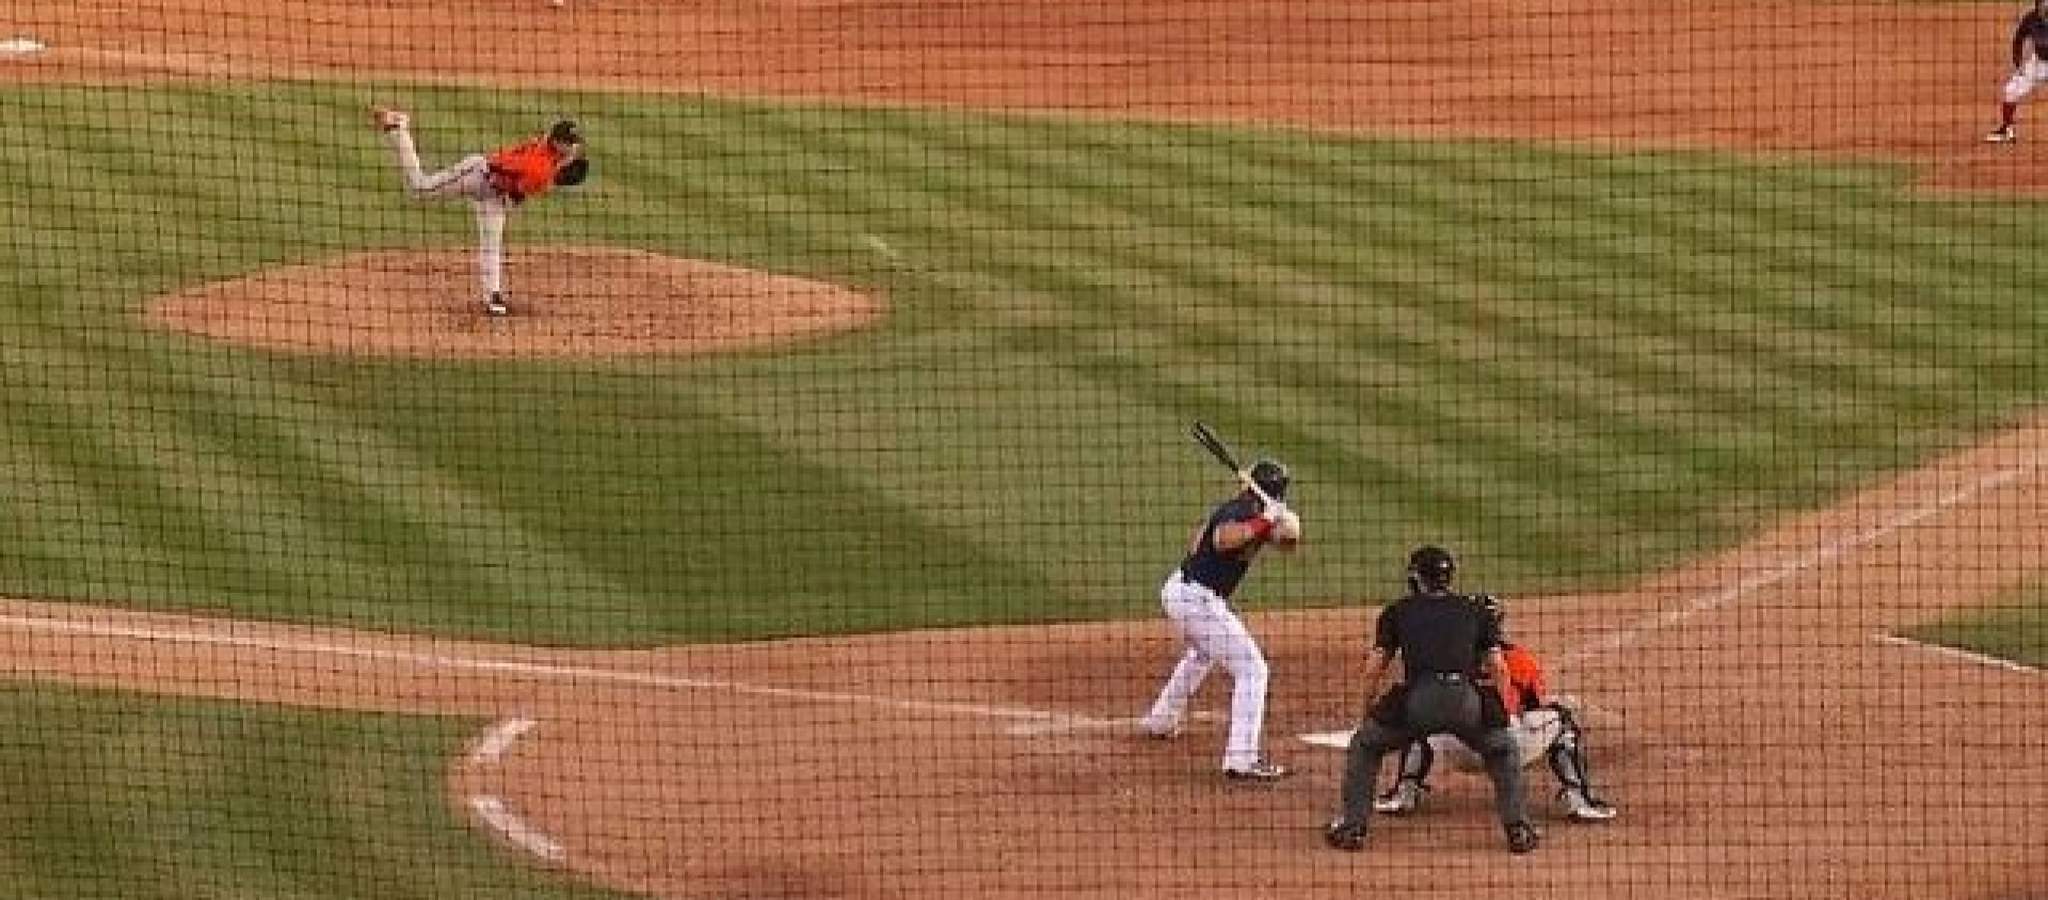 Minor league baseball teams in Southwest Virginia prepare for spring season